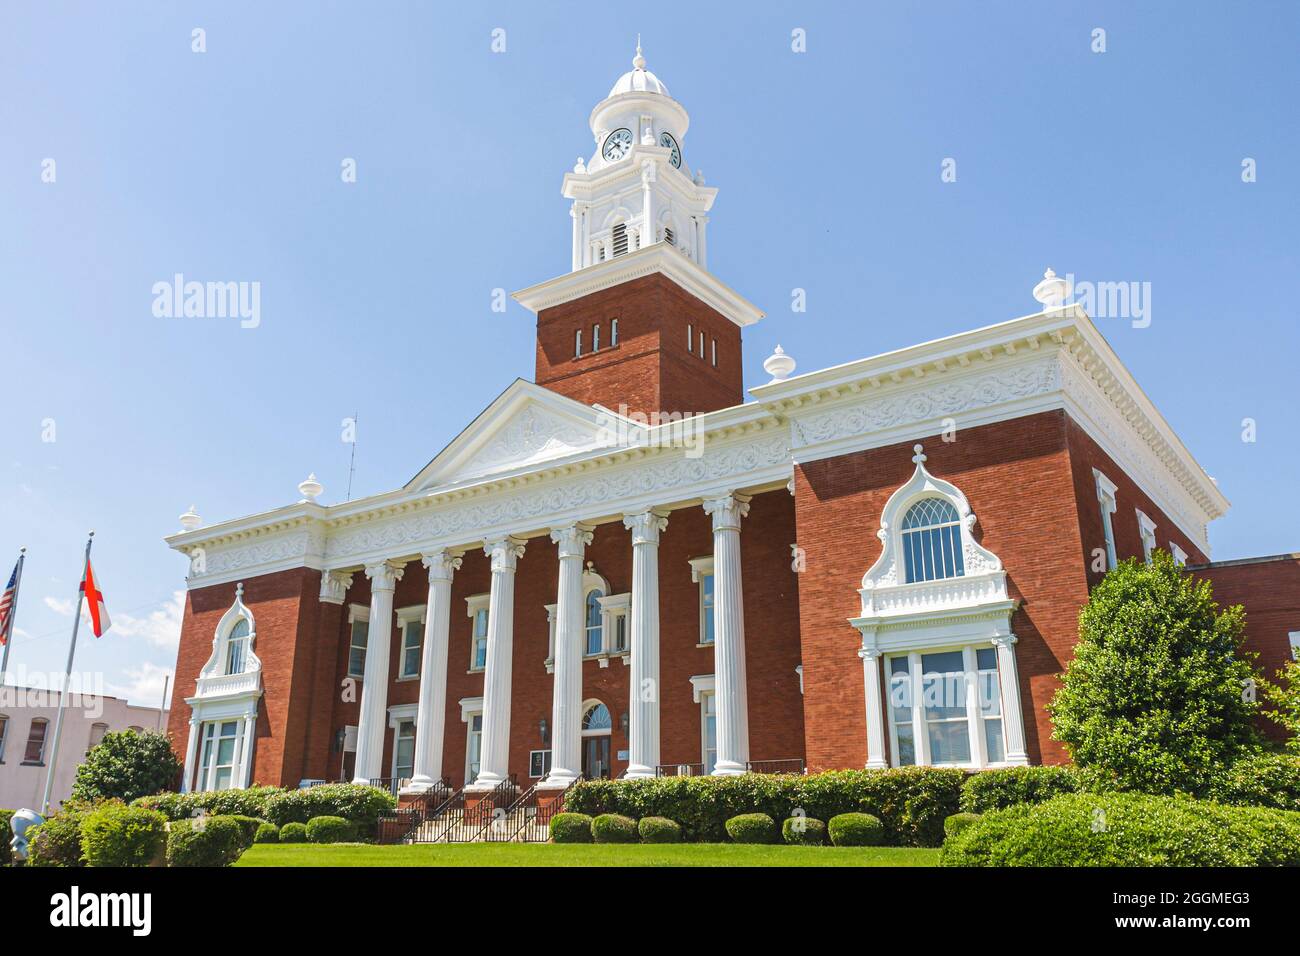 Alabama Opelika, Lee County Courthouse 1896 korinthische Säulen, Gebäude Uhrenturm Neoklassizistische Architektur im revivalen Stil Stockfoto